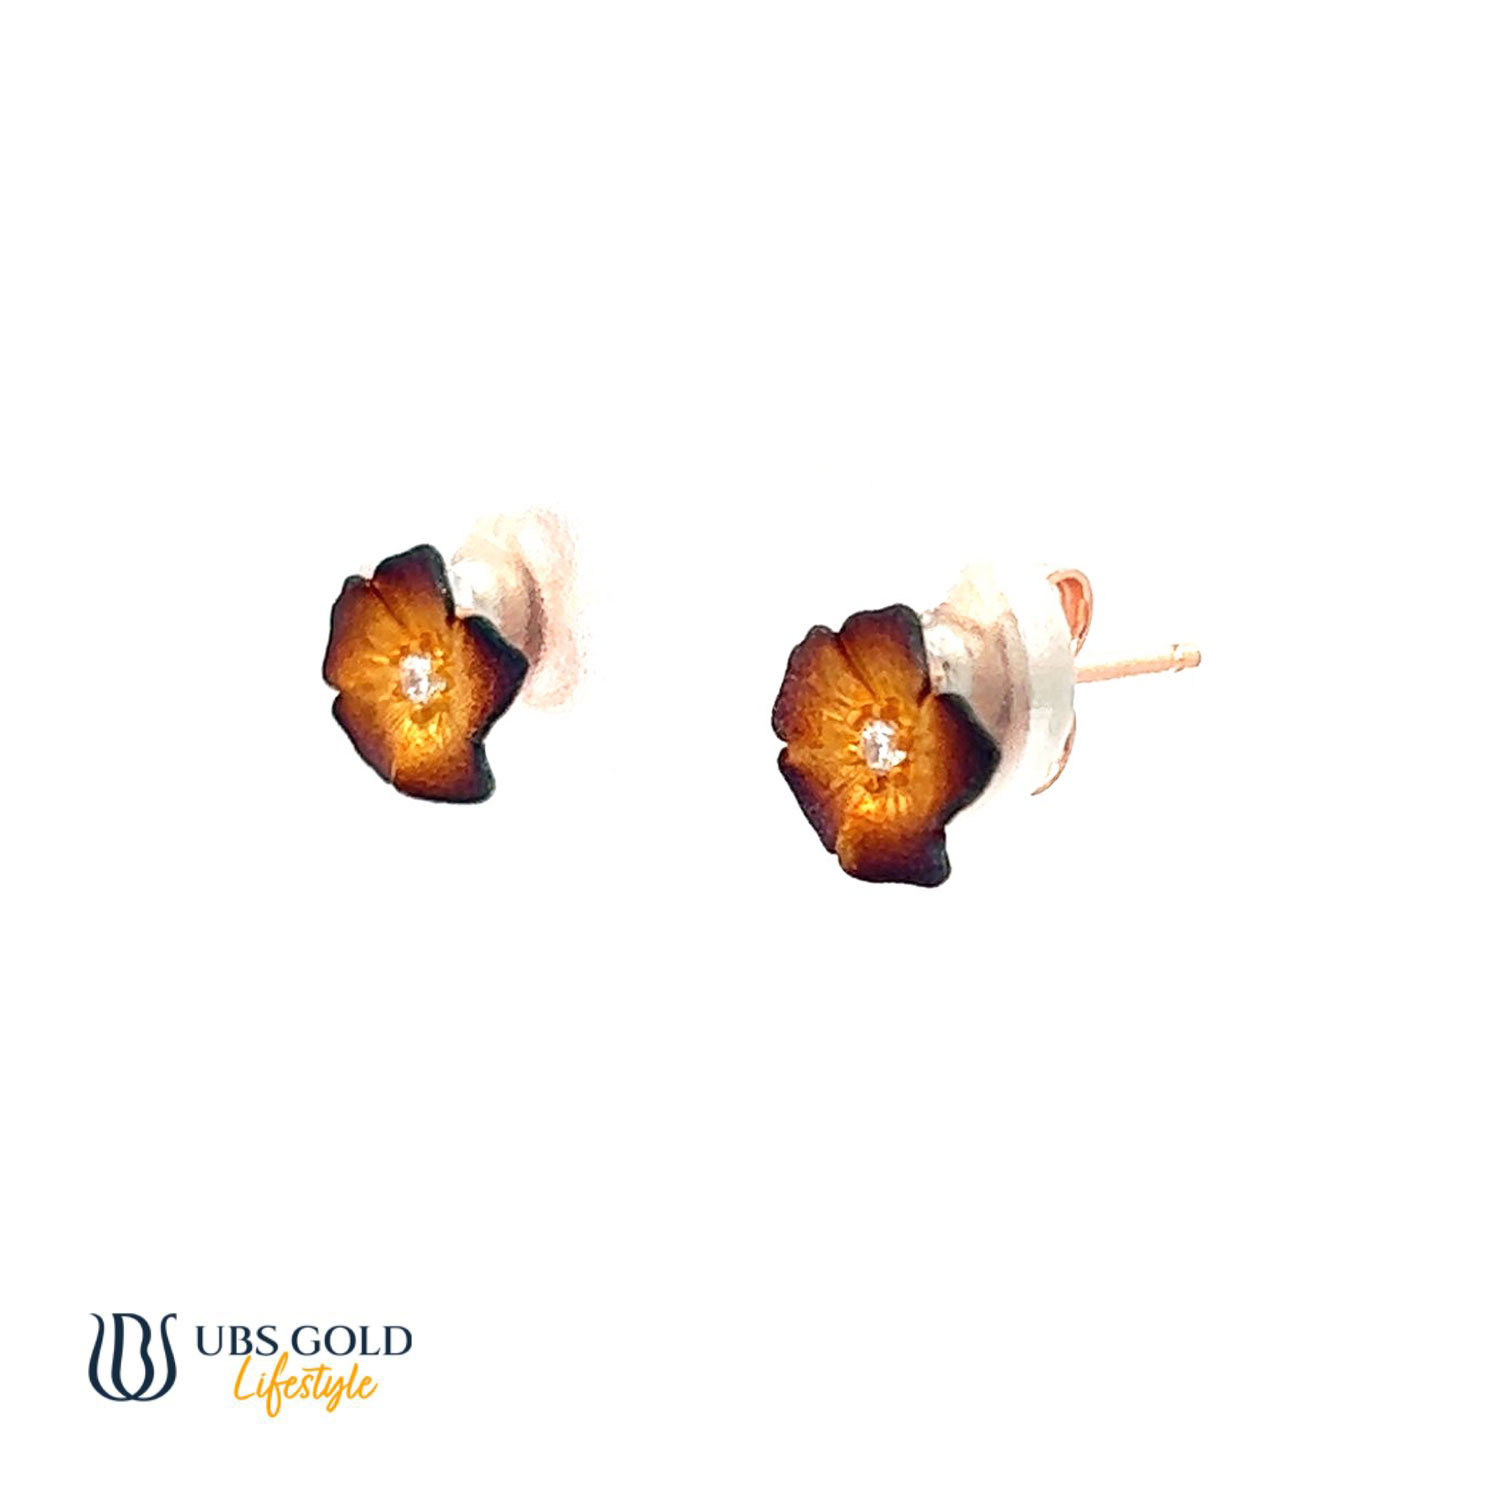 UBS Gold Anting Emas Audrey - Ksw0963 - 17K